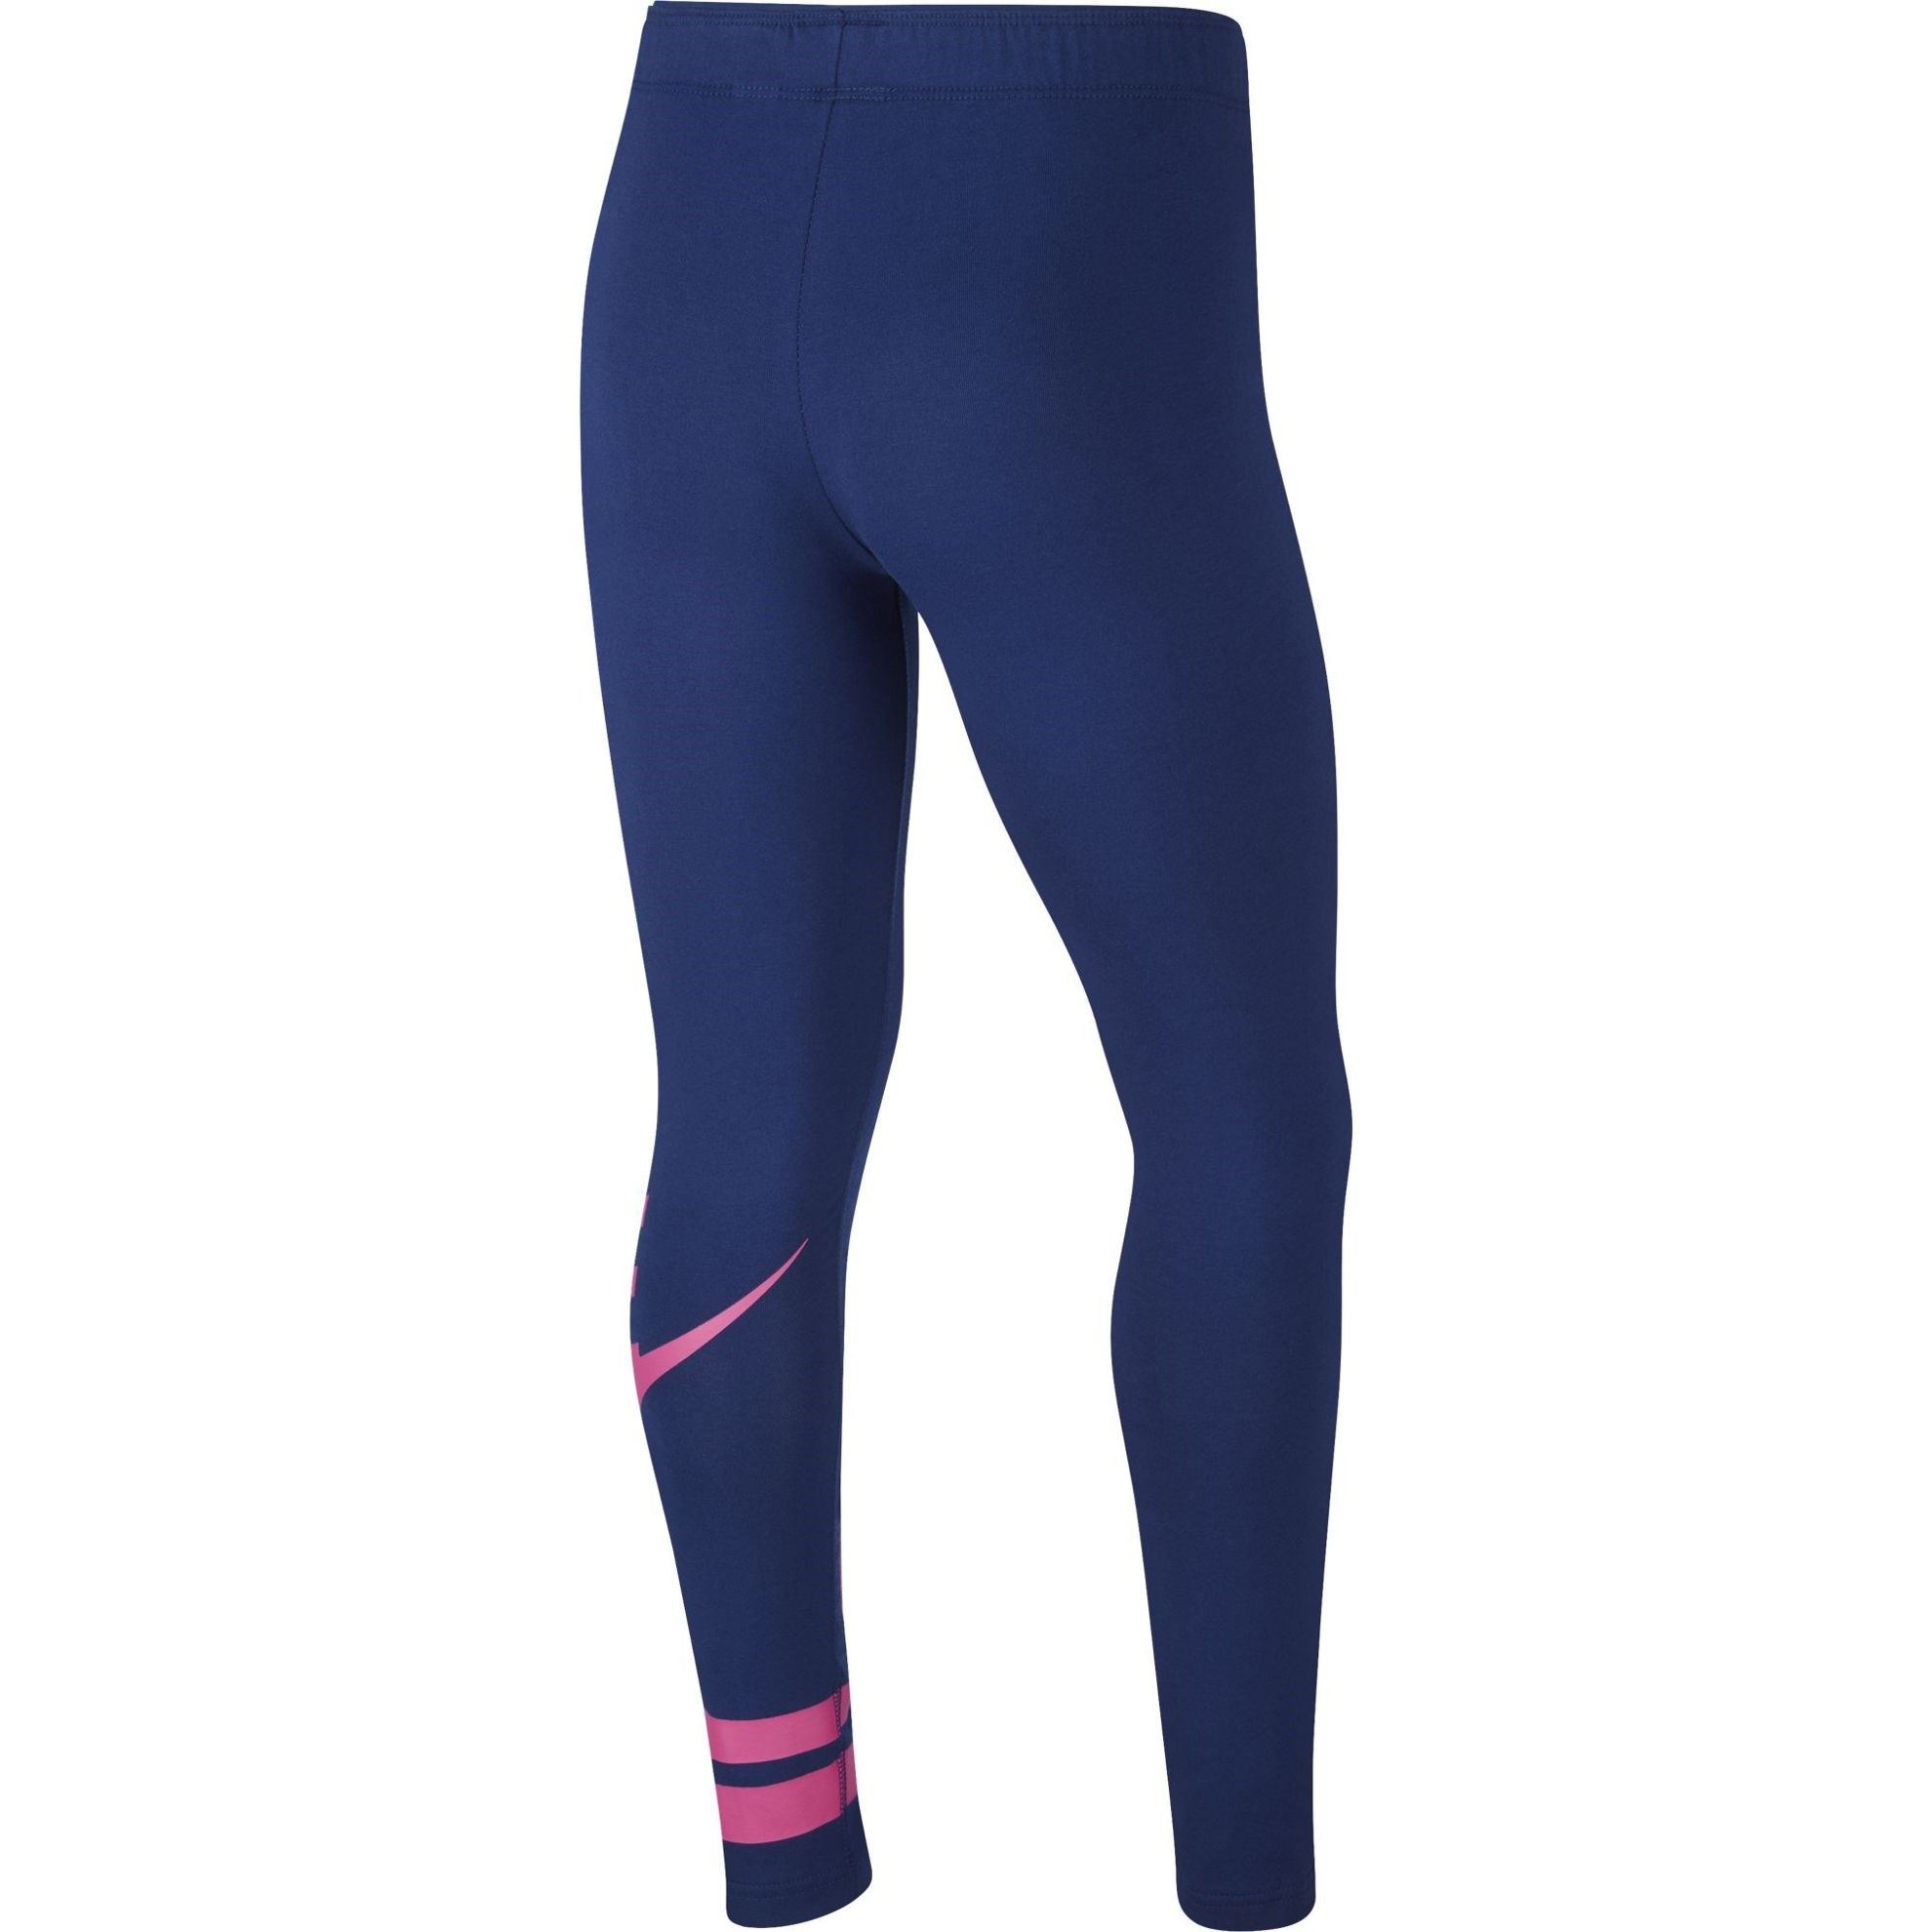 blue and pink nike leggings